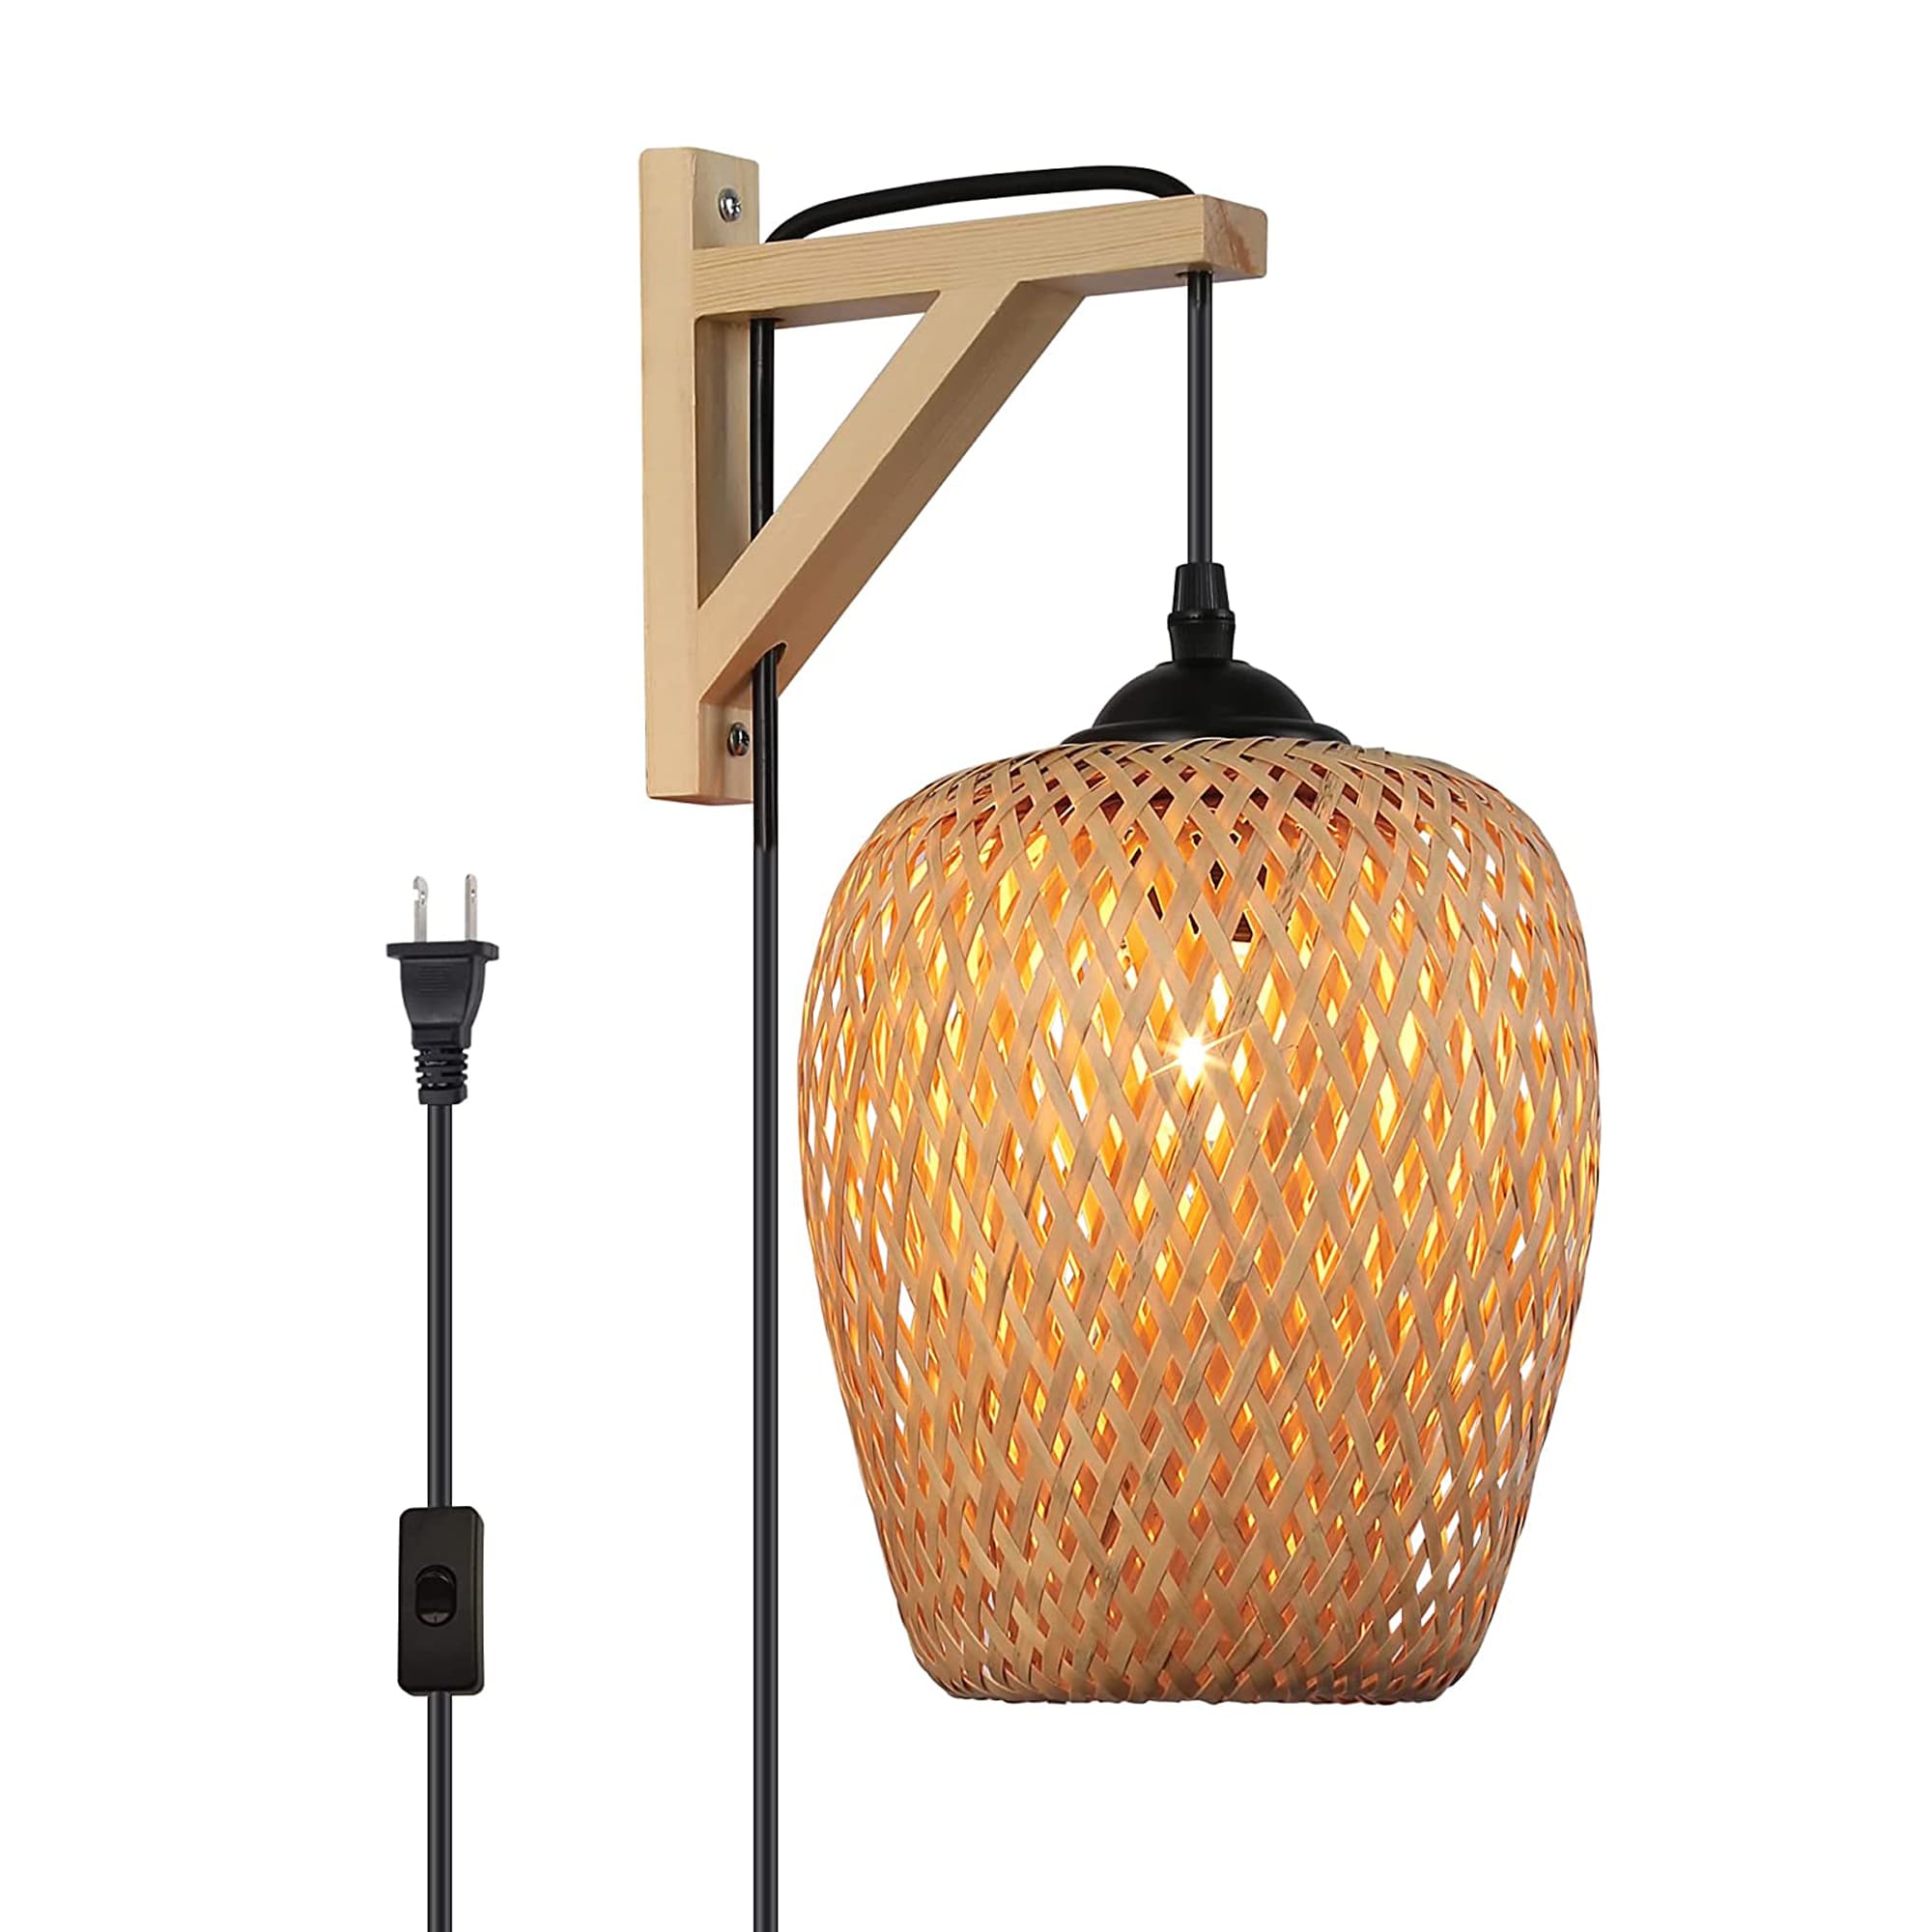 SUNLLOK wood rattan wall lamp 8.7-in W 1-Light Rattan Industrial Wall ...